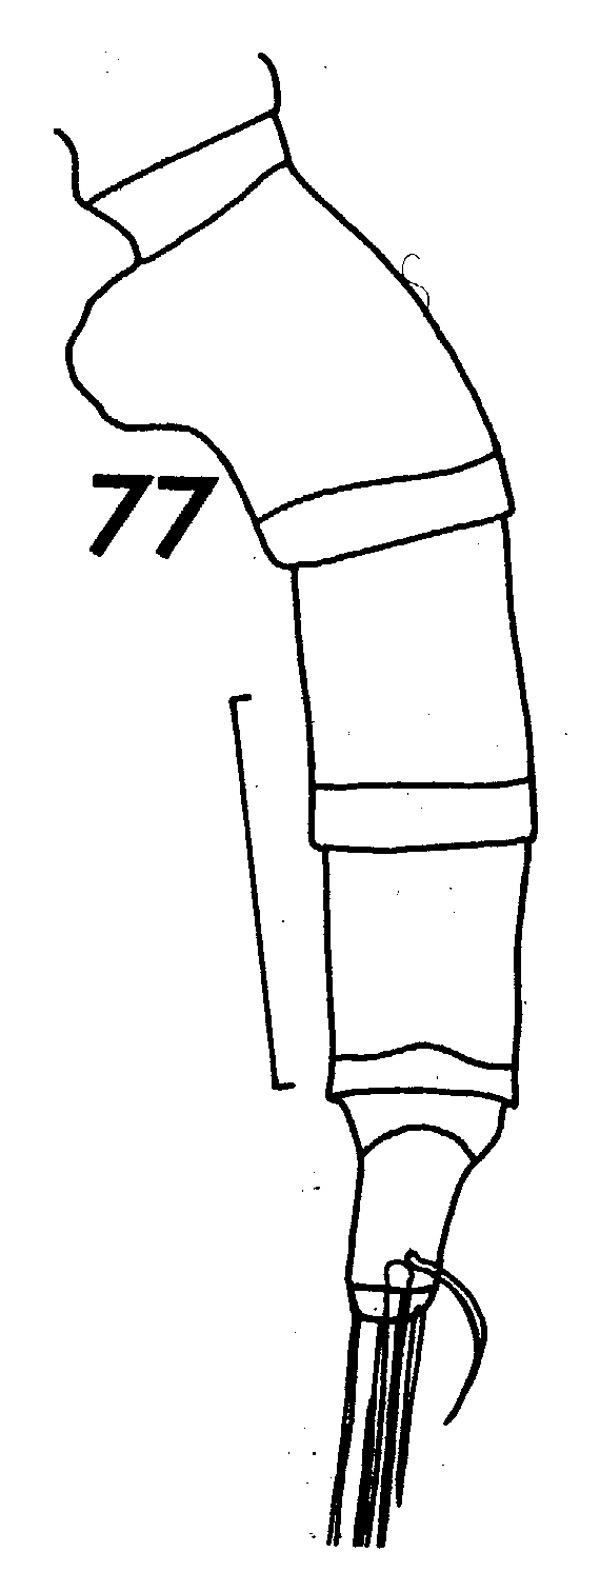 Espèce Euchaeta marina - Planche 7 de figures morphologiques